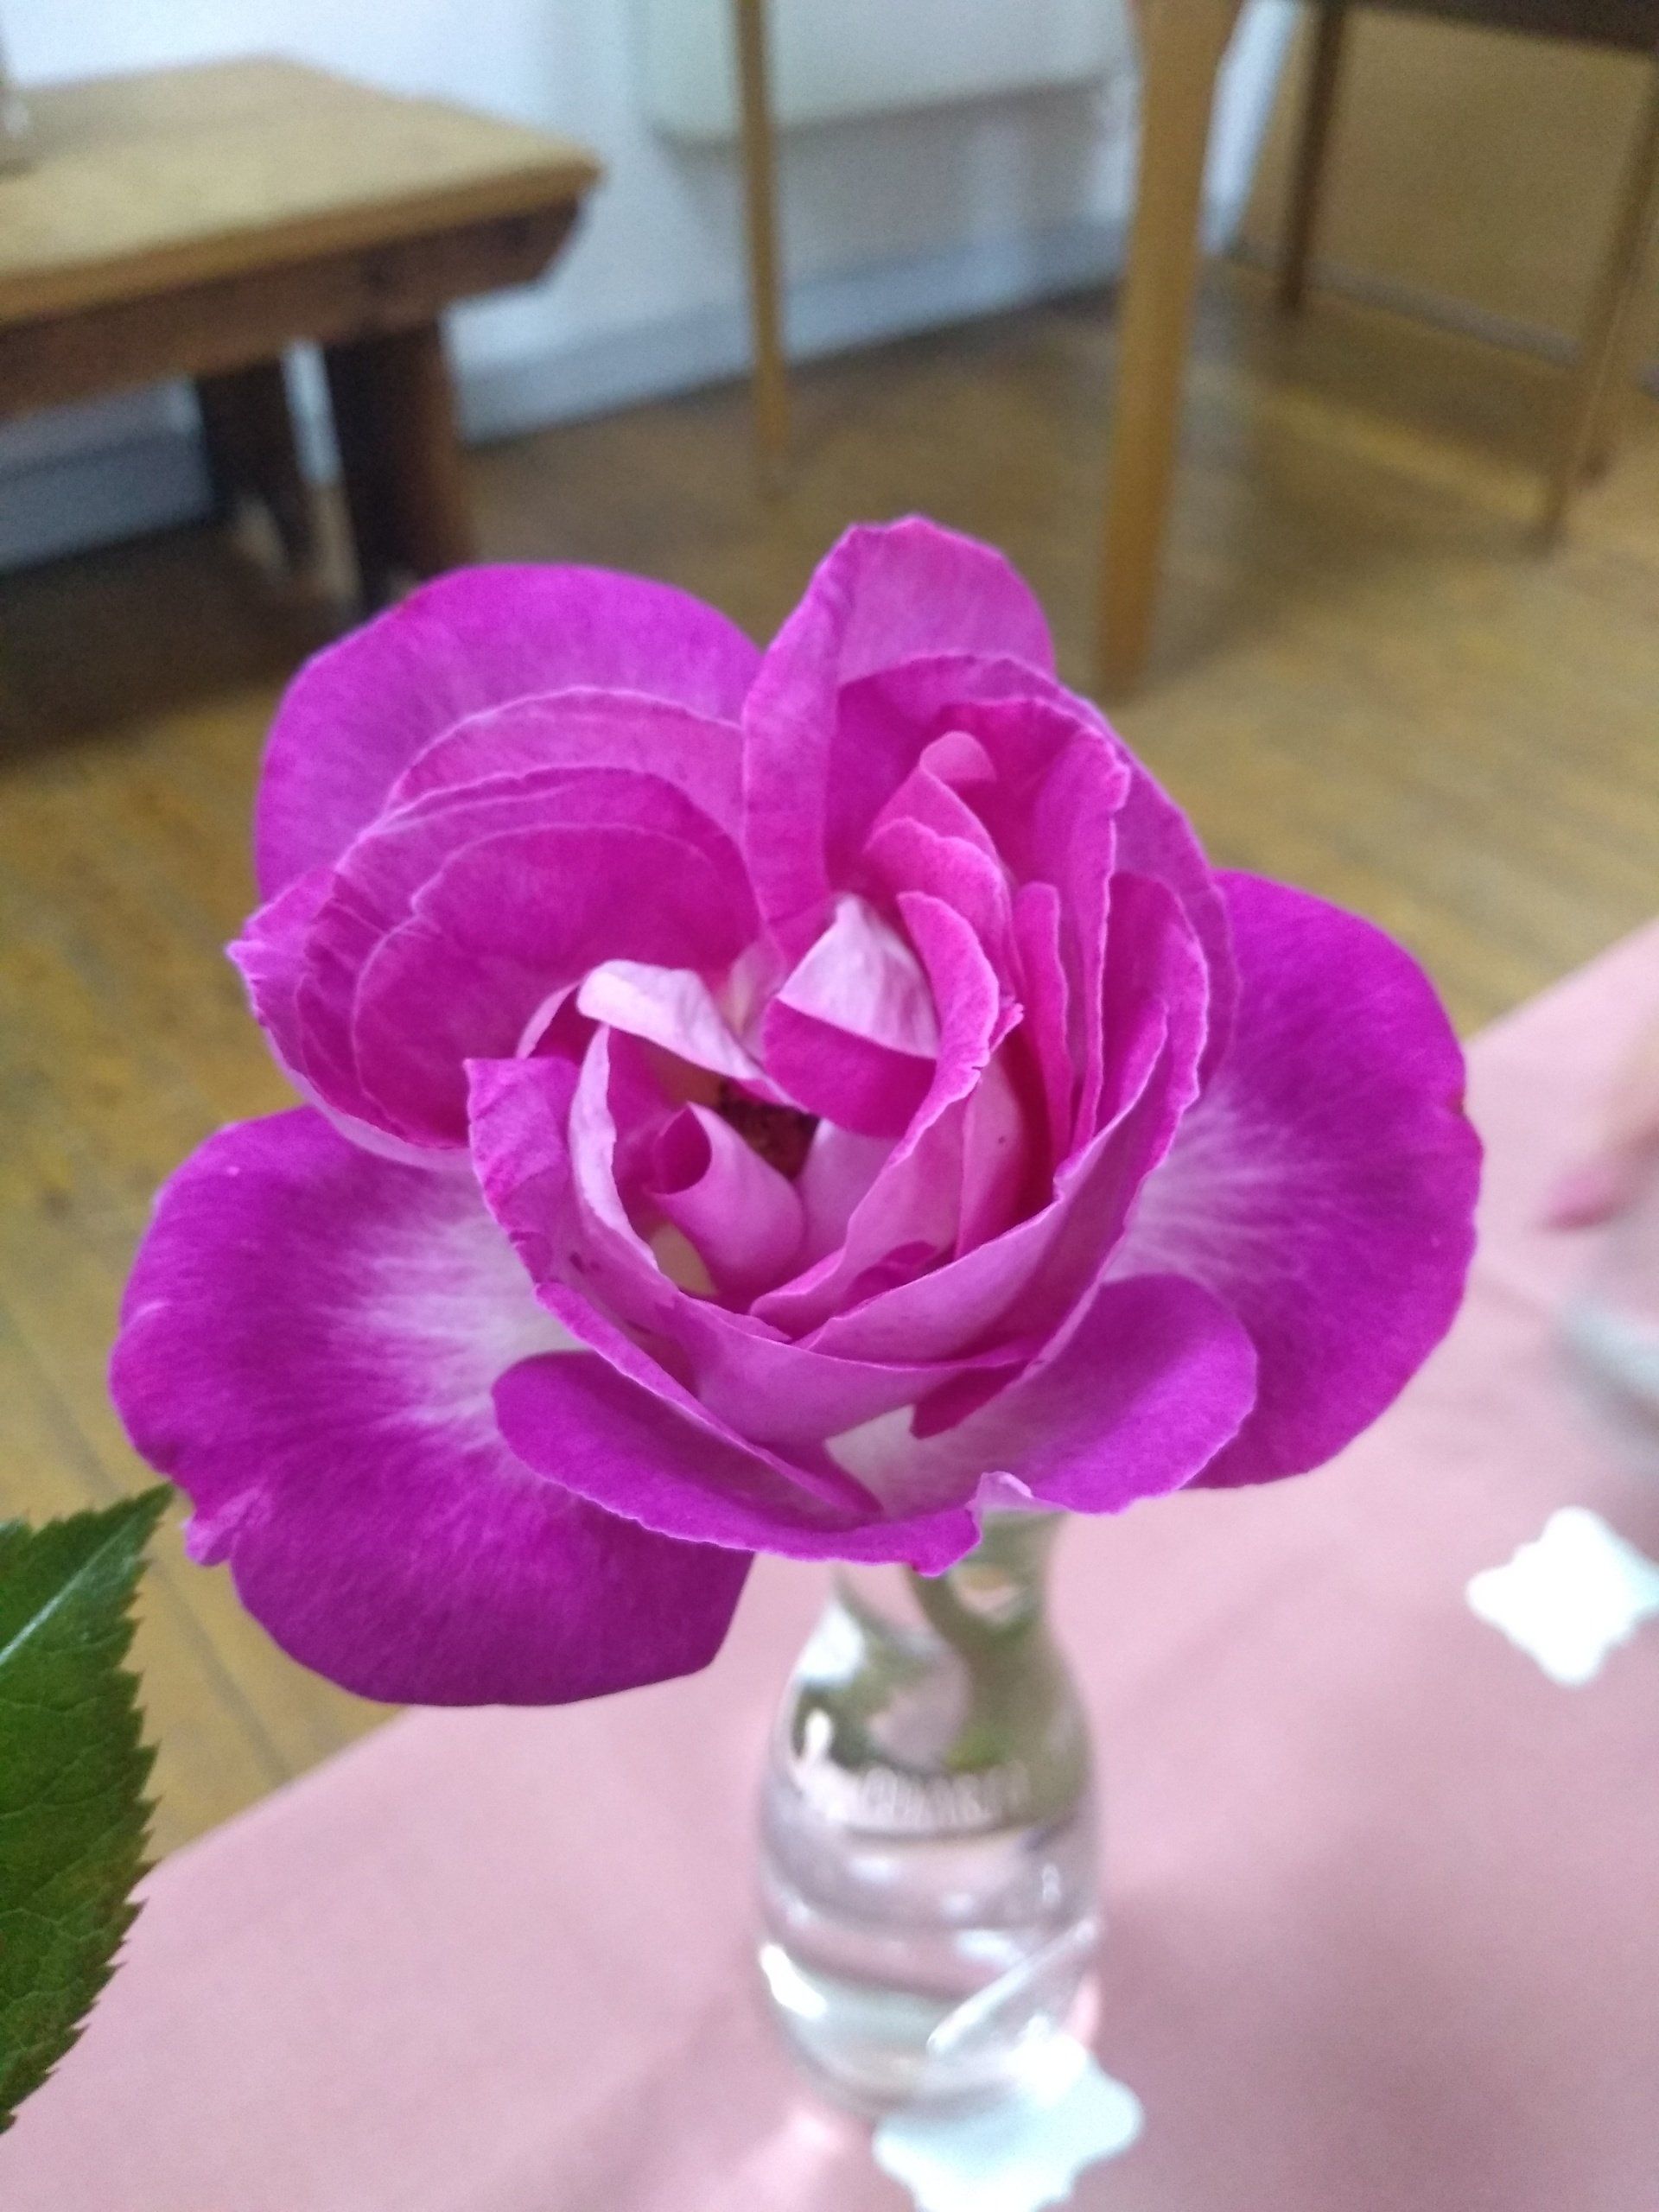 2nd prize modern rose dark pink or purple with lighter highlights